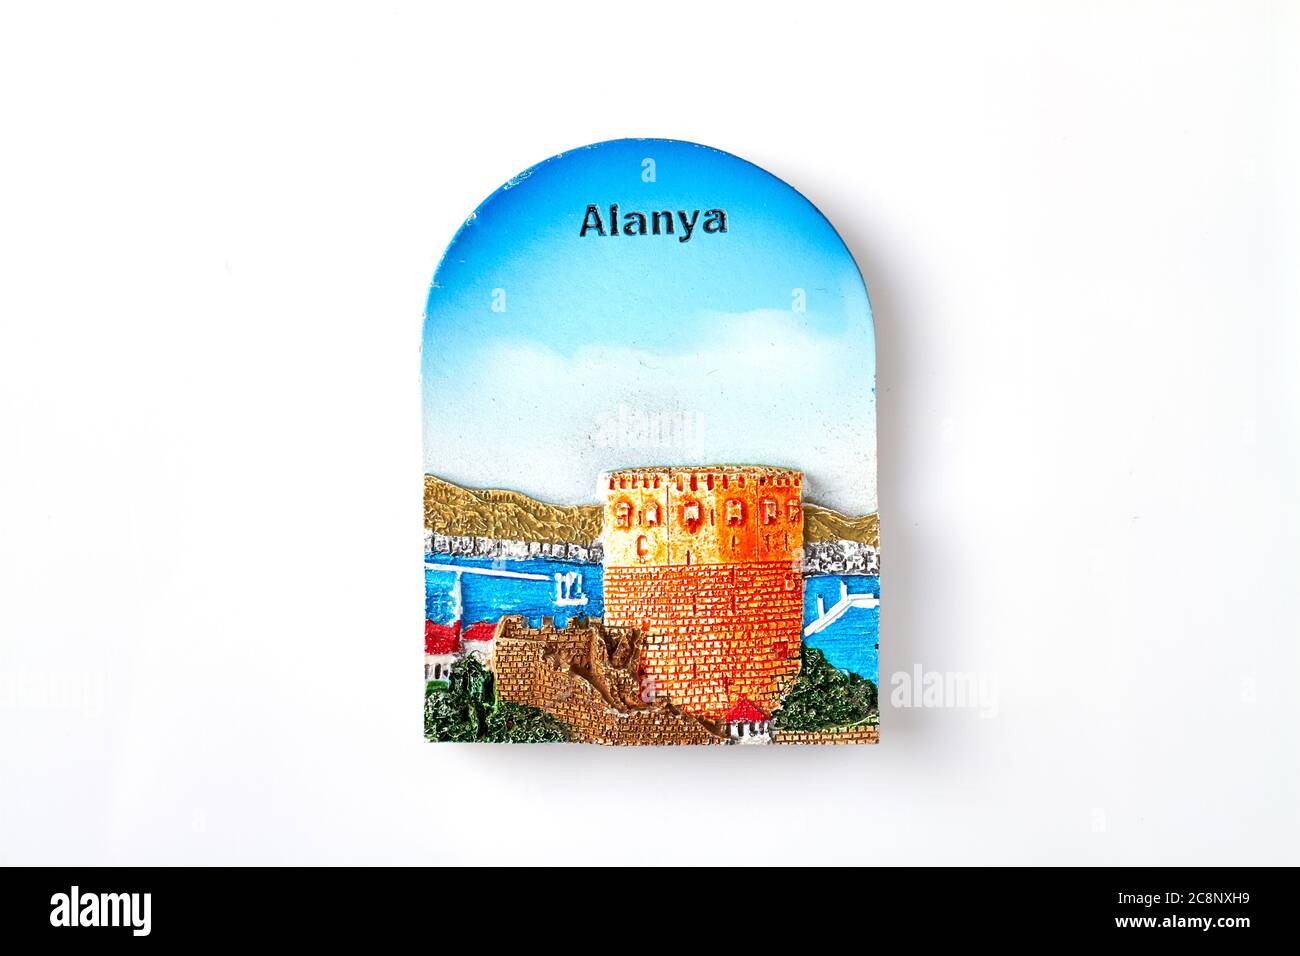 Alanya tourist souvenir. Stock Photo